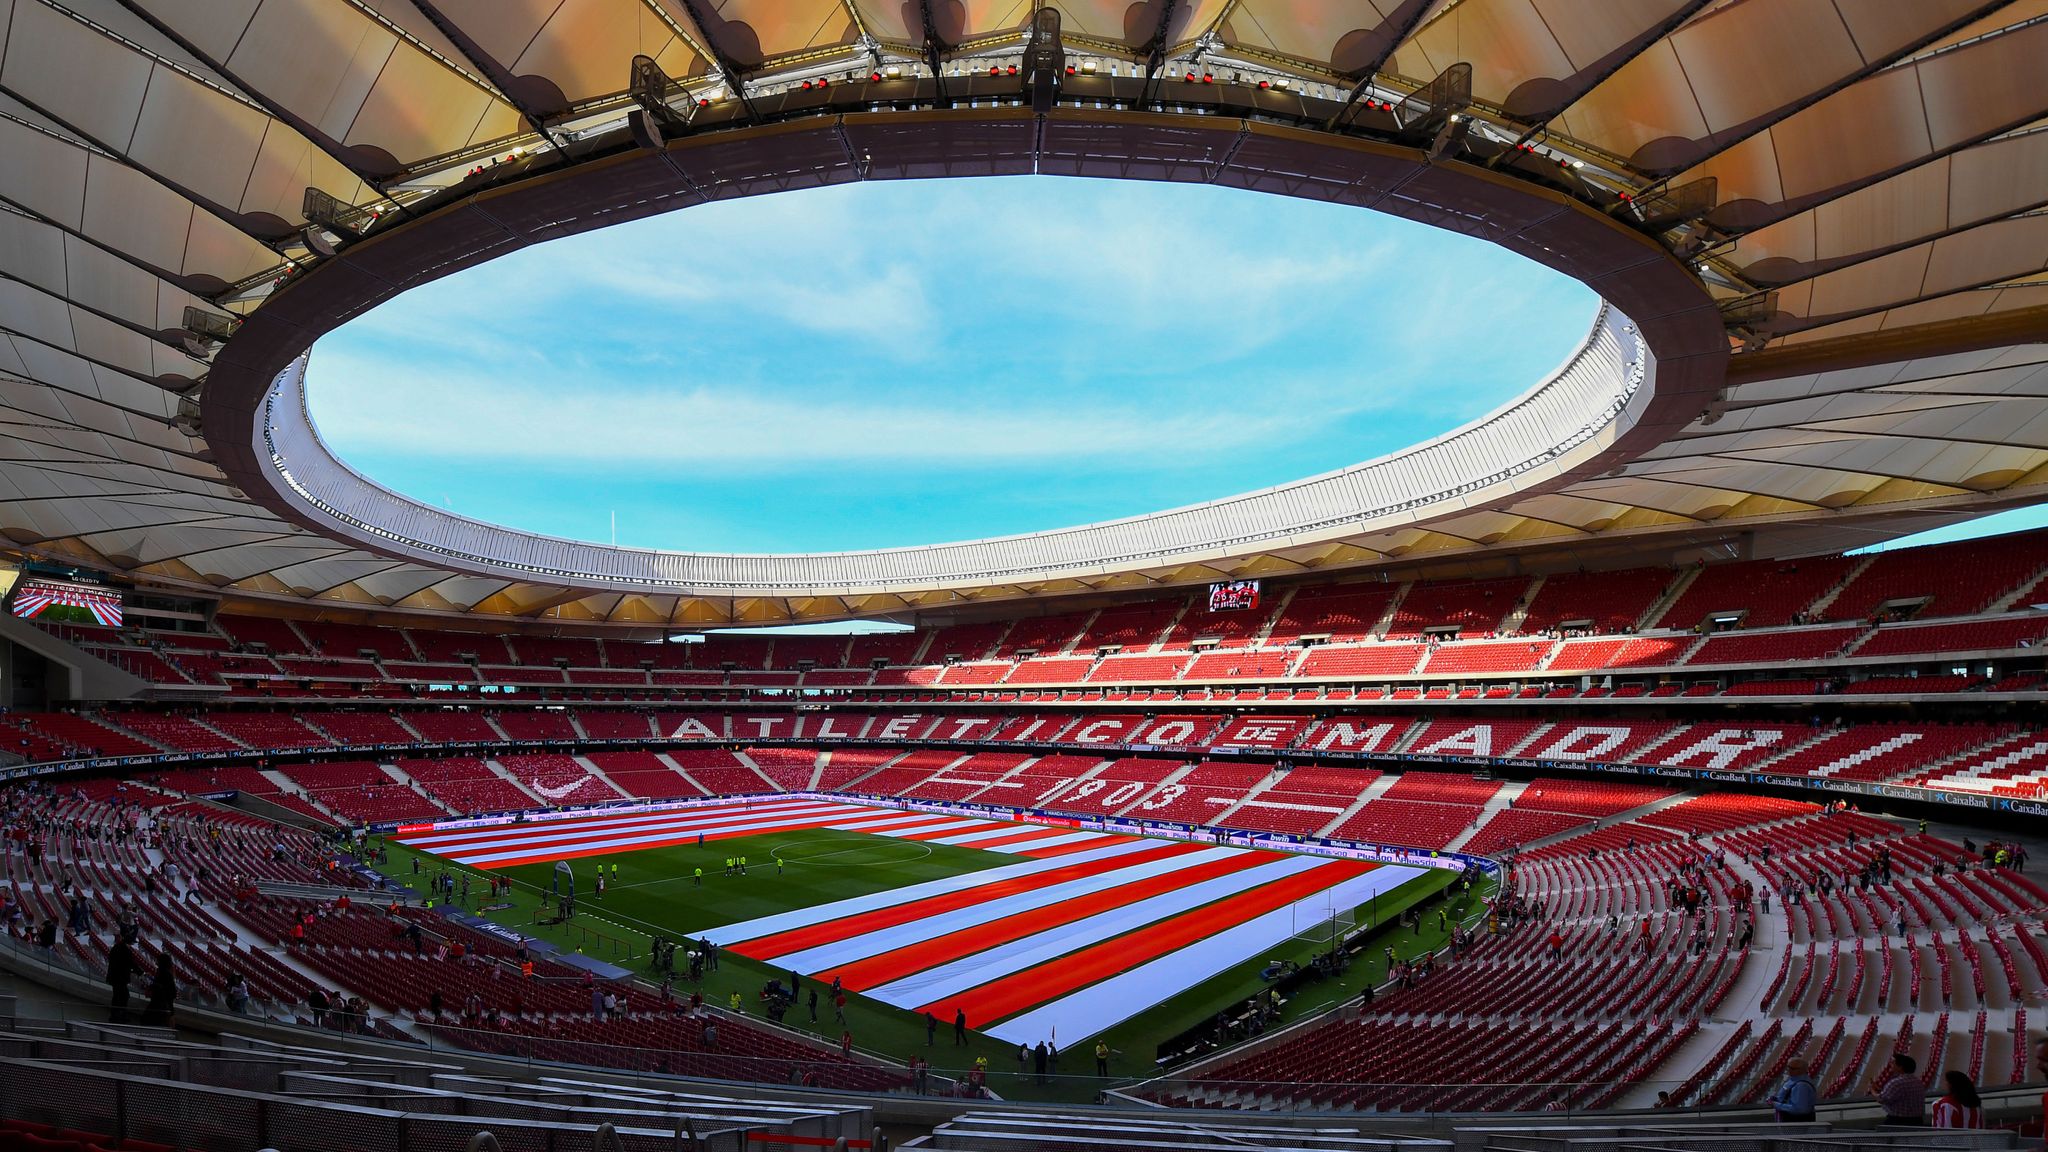 Atletico Madrid's Wanda Metropolitano stadium to host the 2019